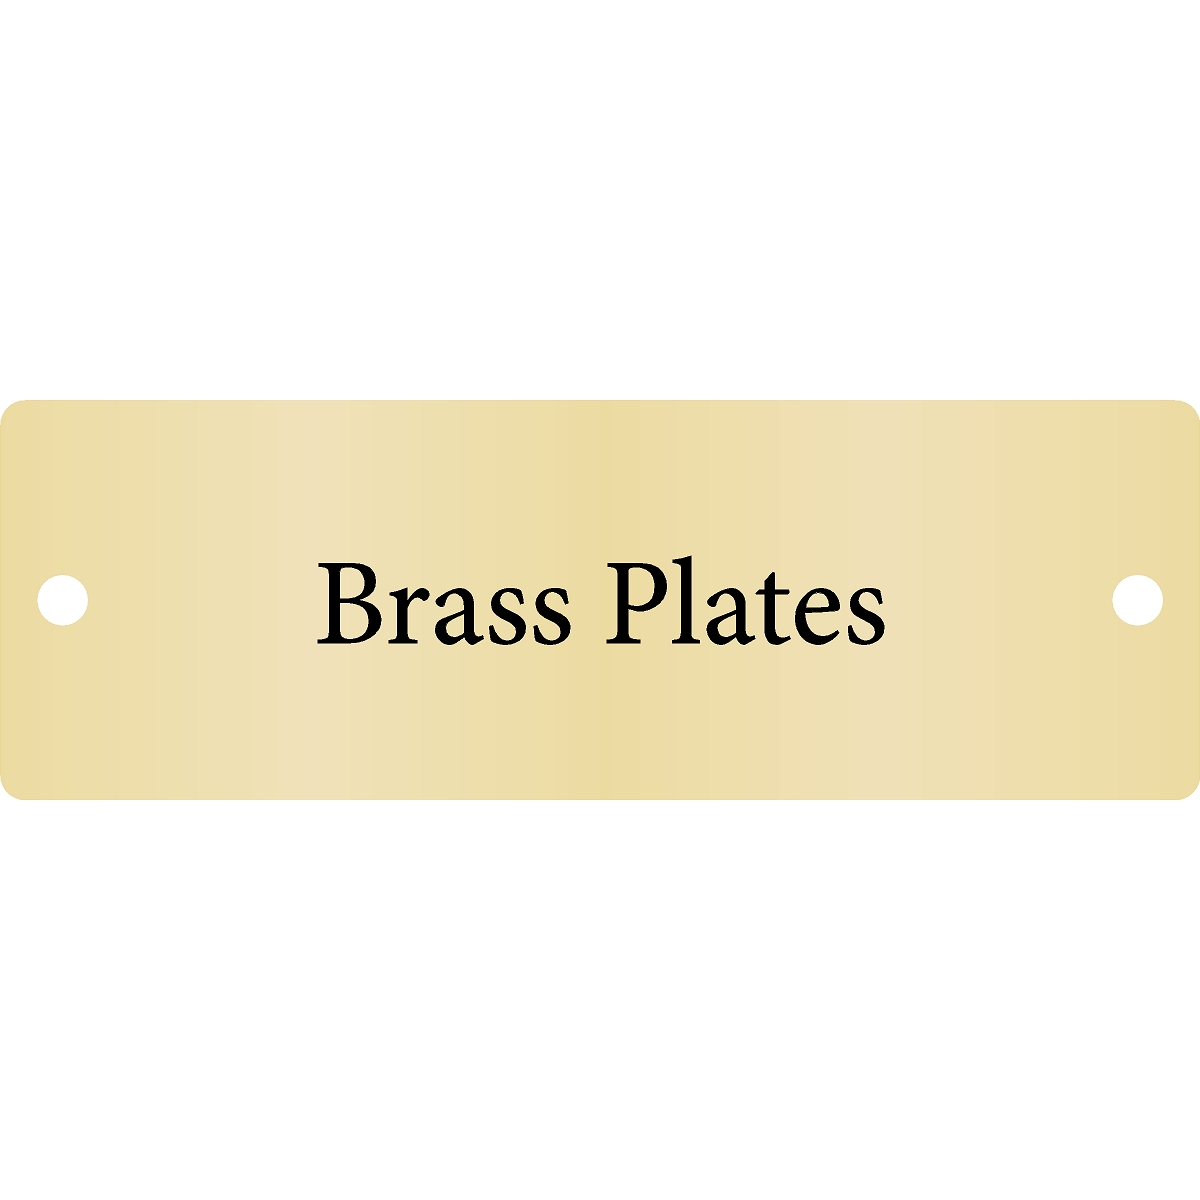 The brass plates